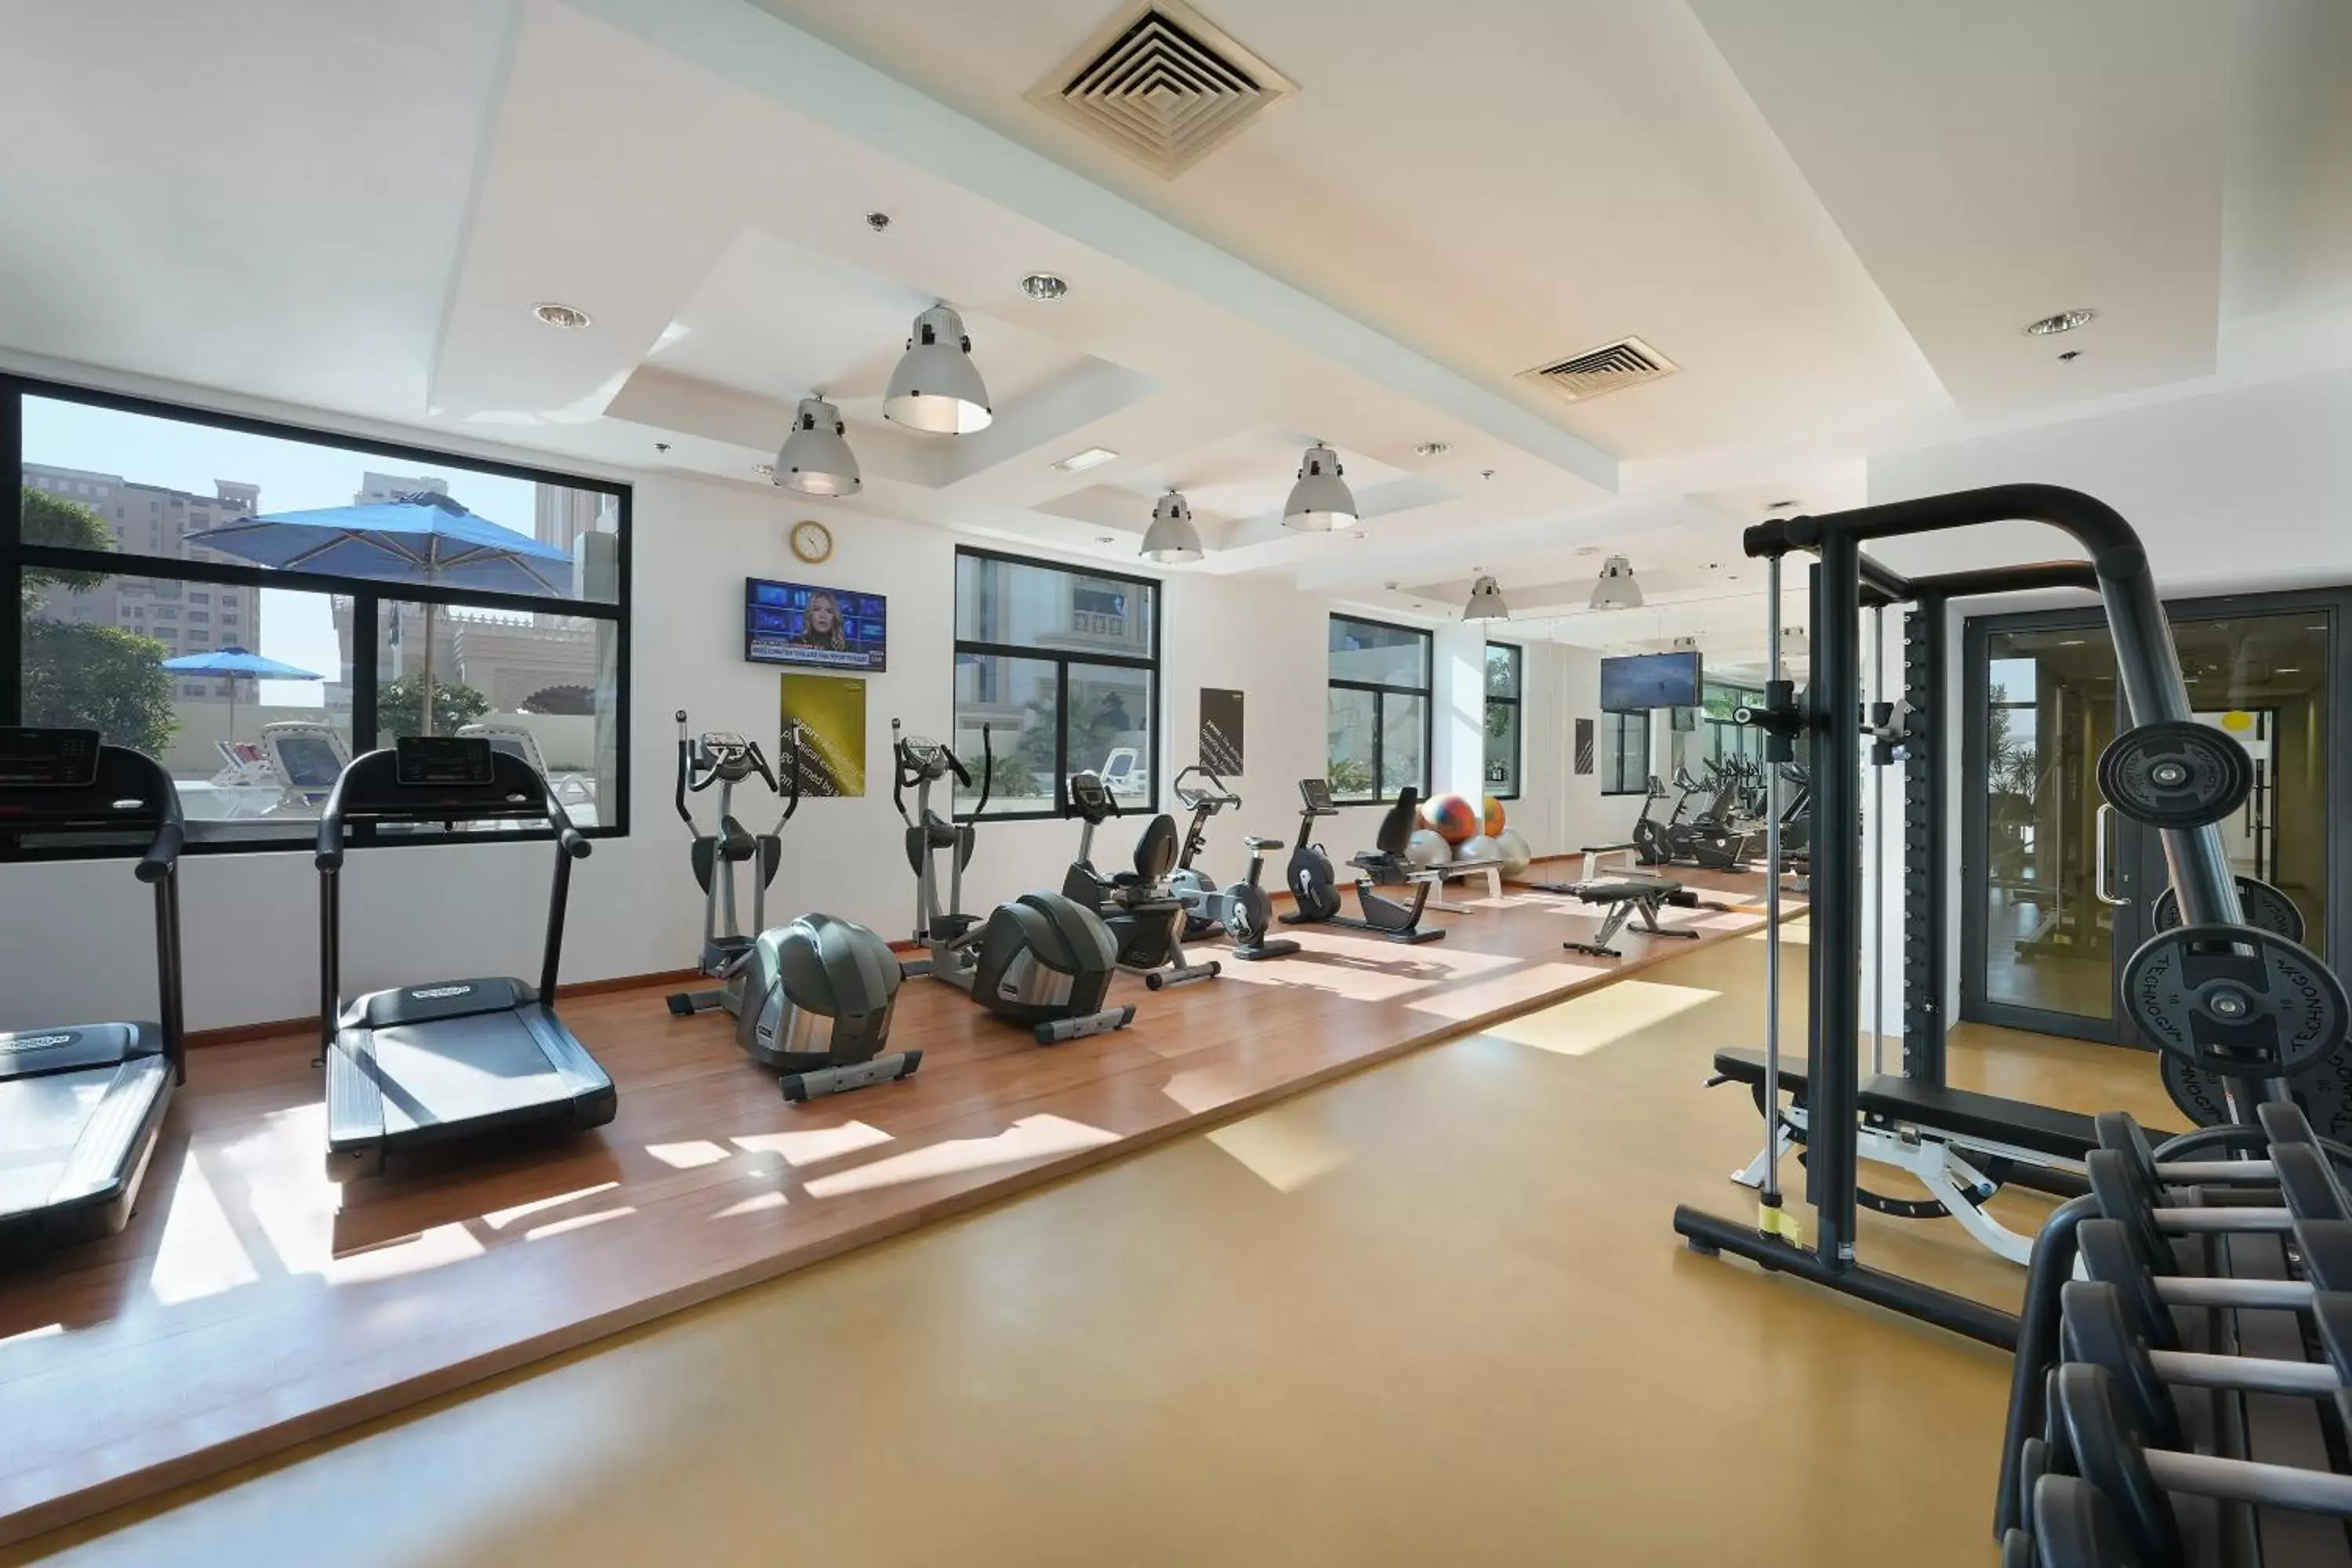 Fitness centre/facilities, Fitness Center/Facilities in Park Apartments Dubai, an Edge By Rotana Hotel